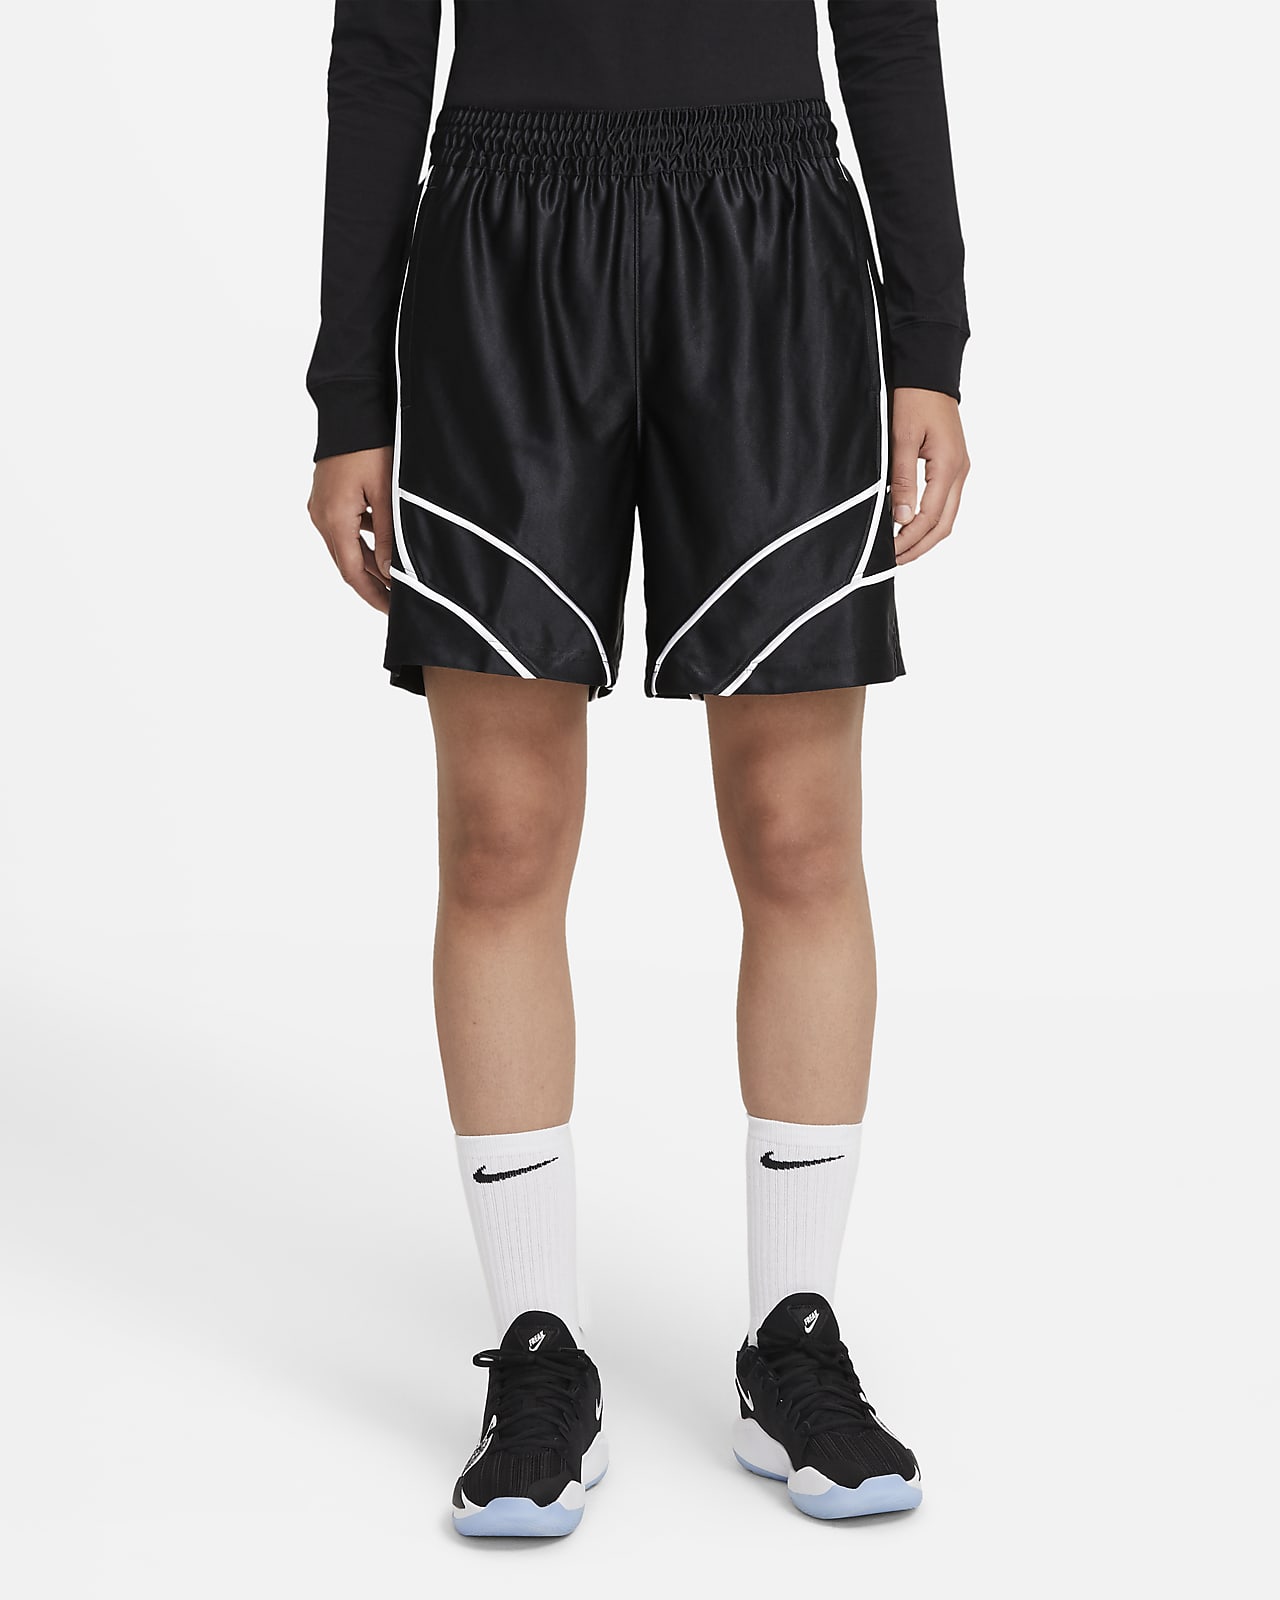 nike basketball shorts for girls